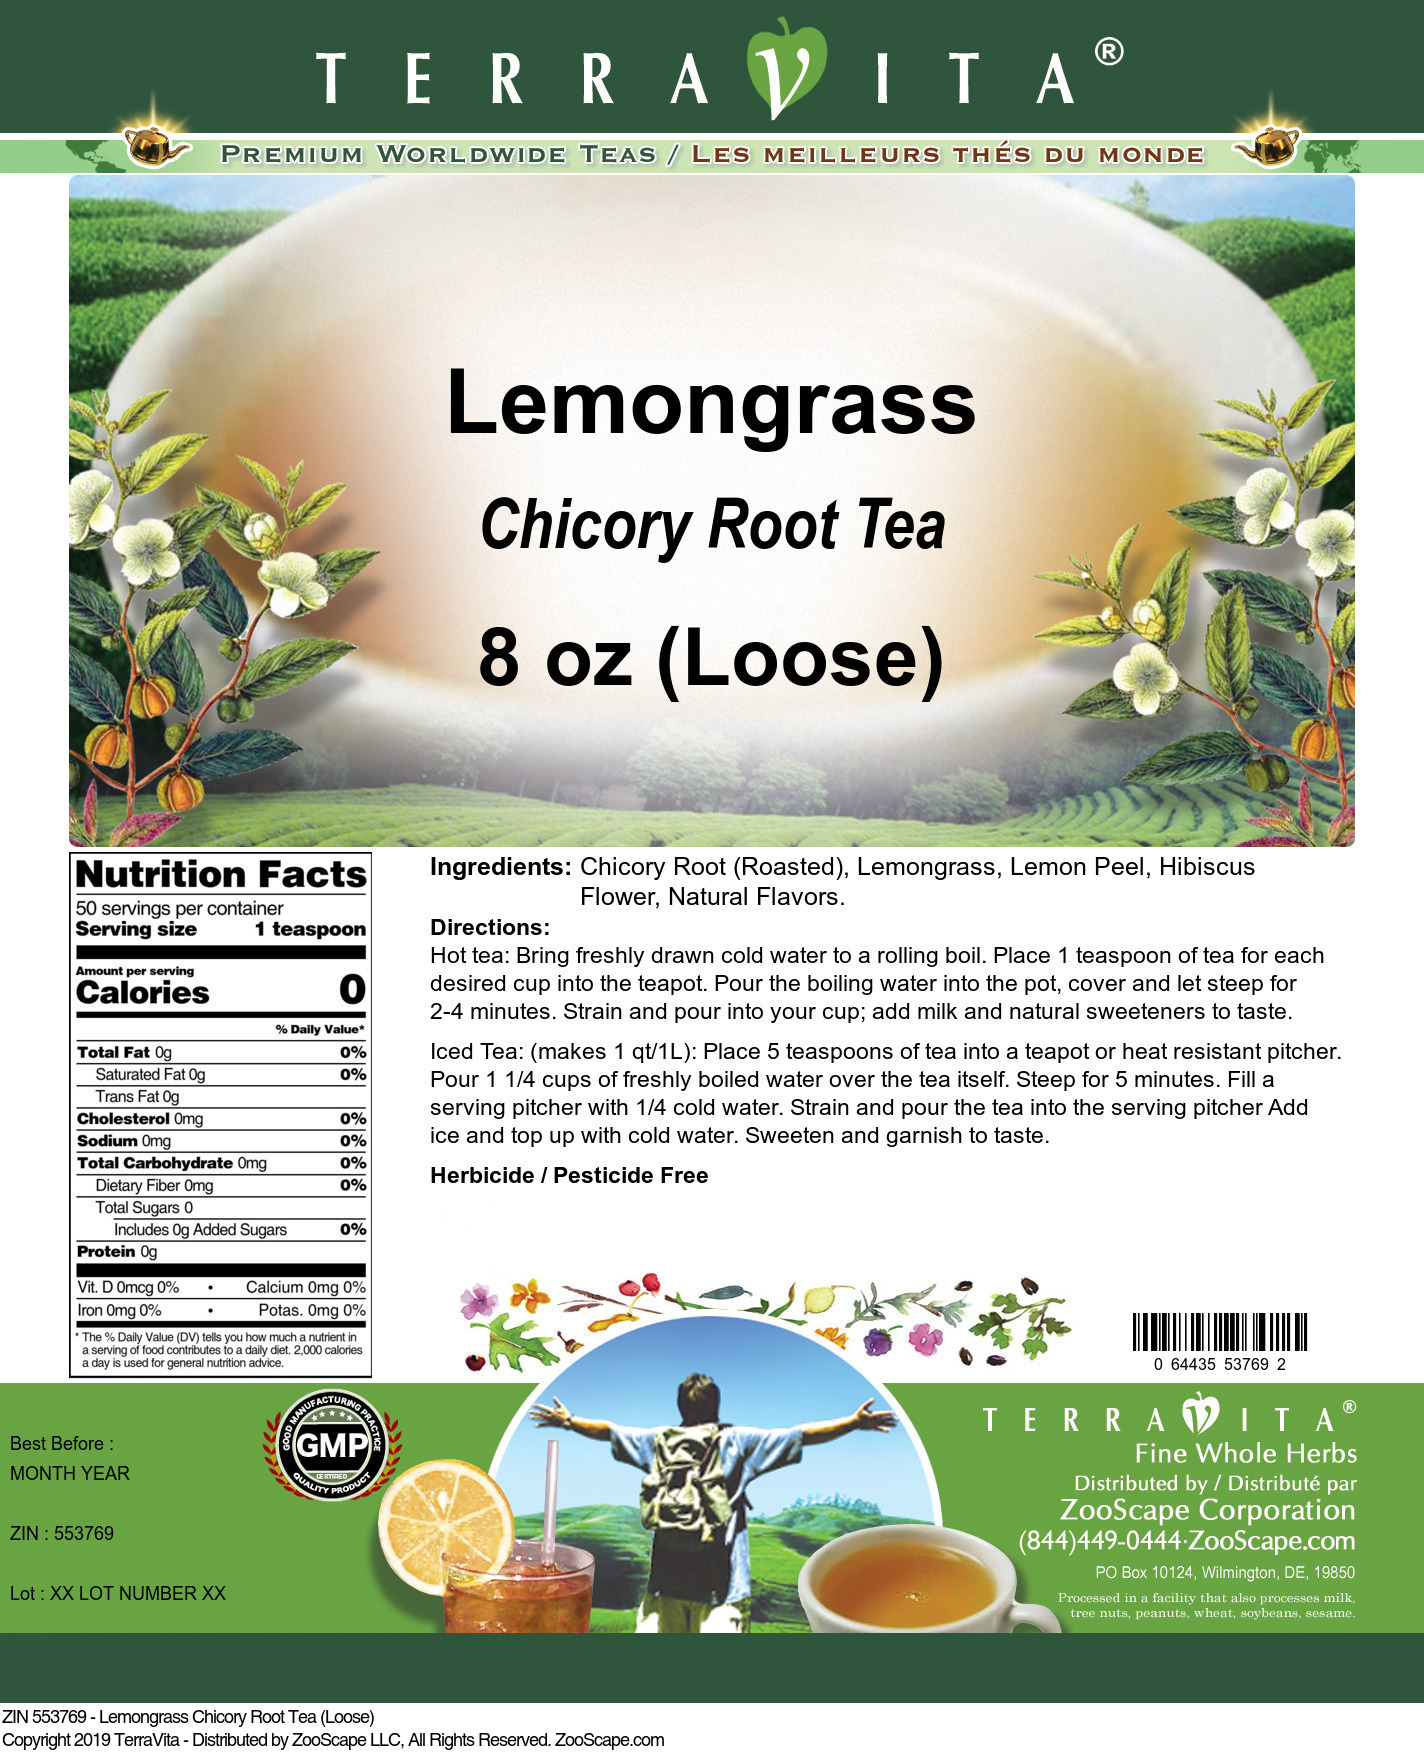 Lemongrass Chicory Root Tea (Loose) - Label